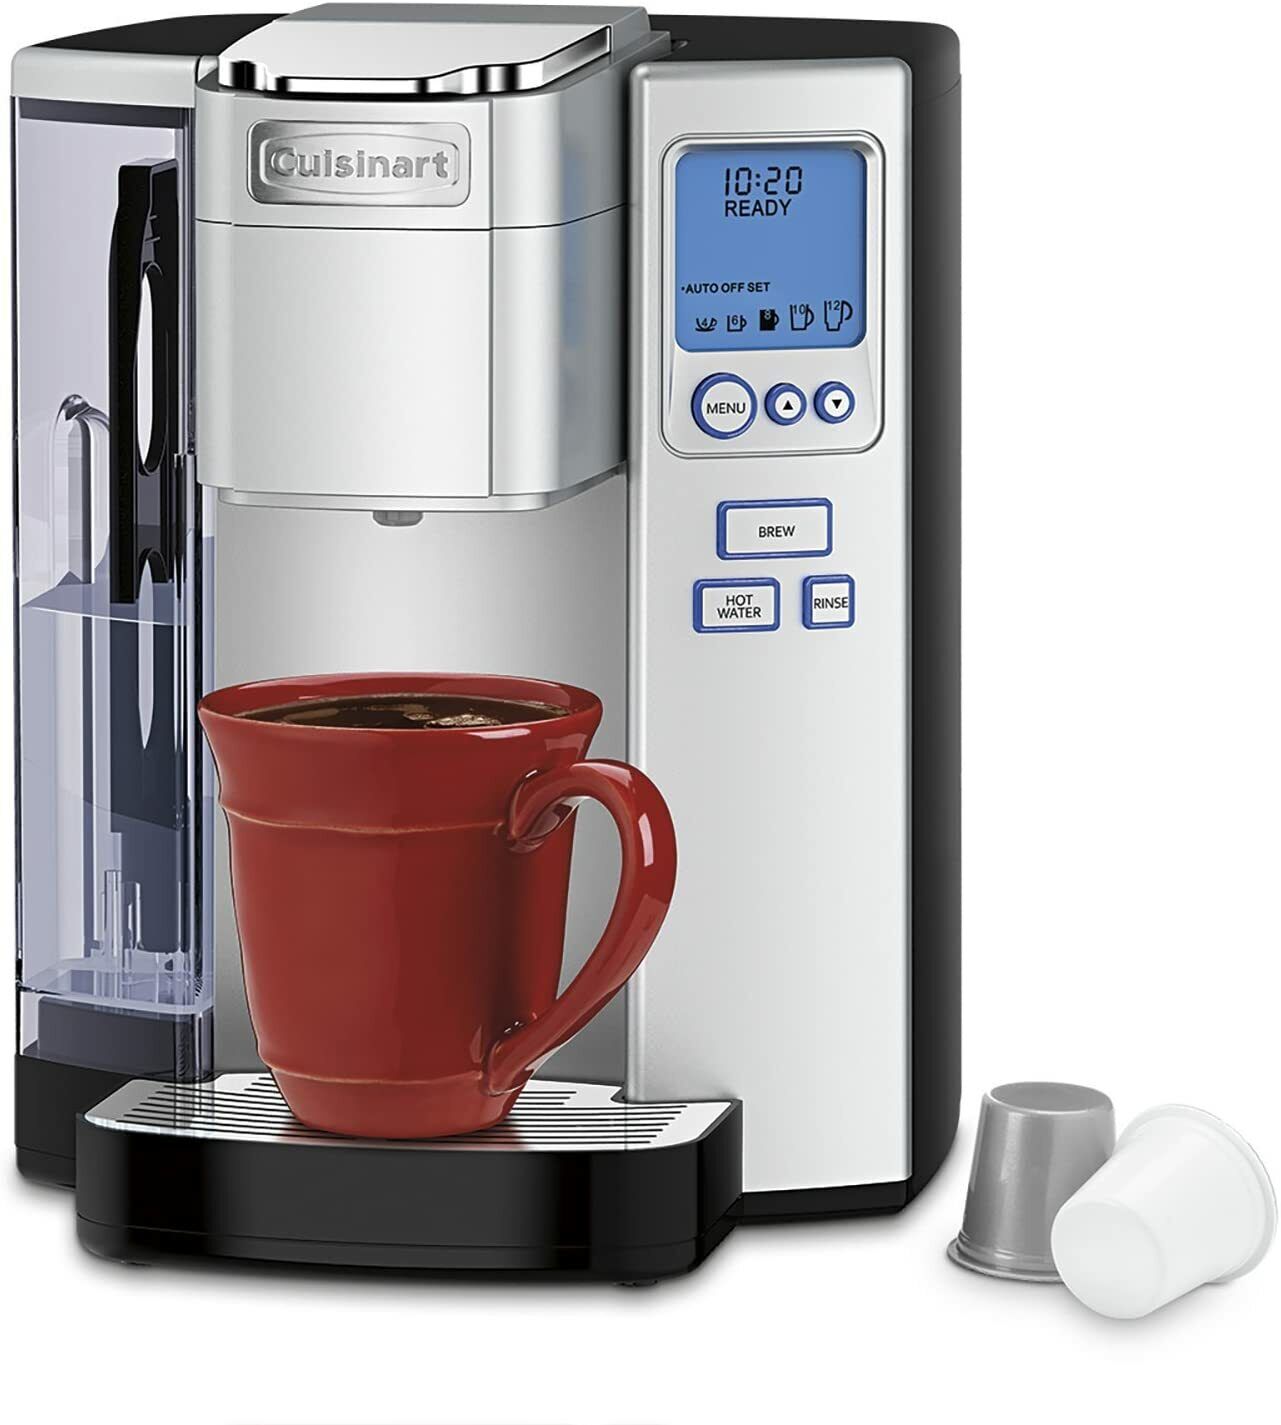 Cuisinart SS-10P1 Premium Programmable Single-Serve Coffee Maker